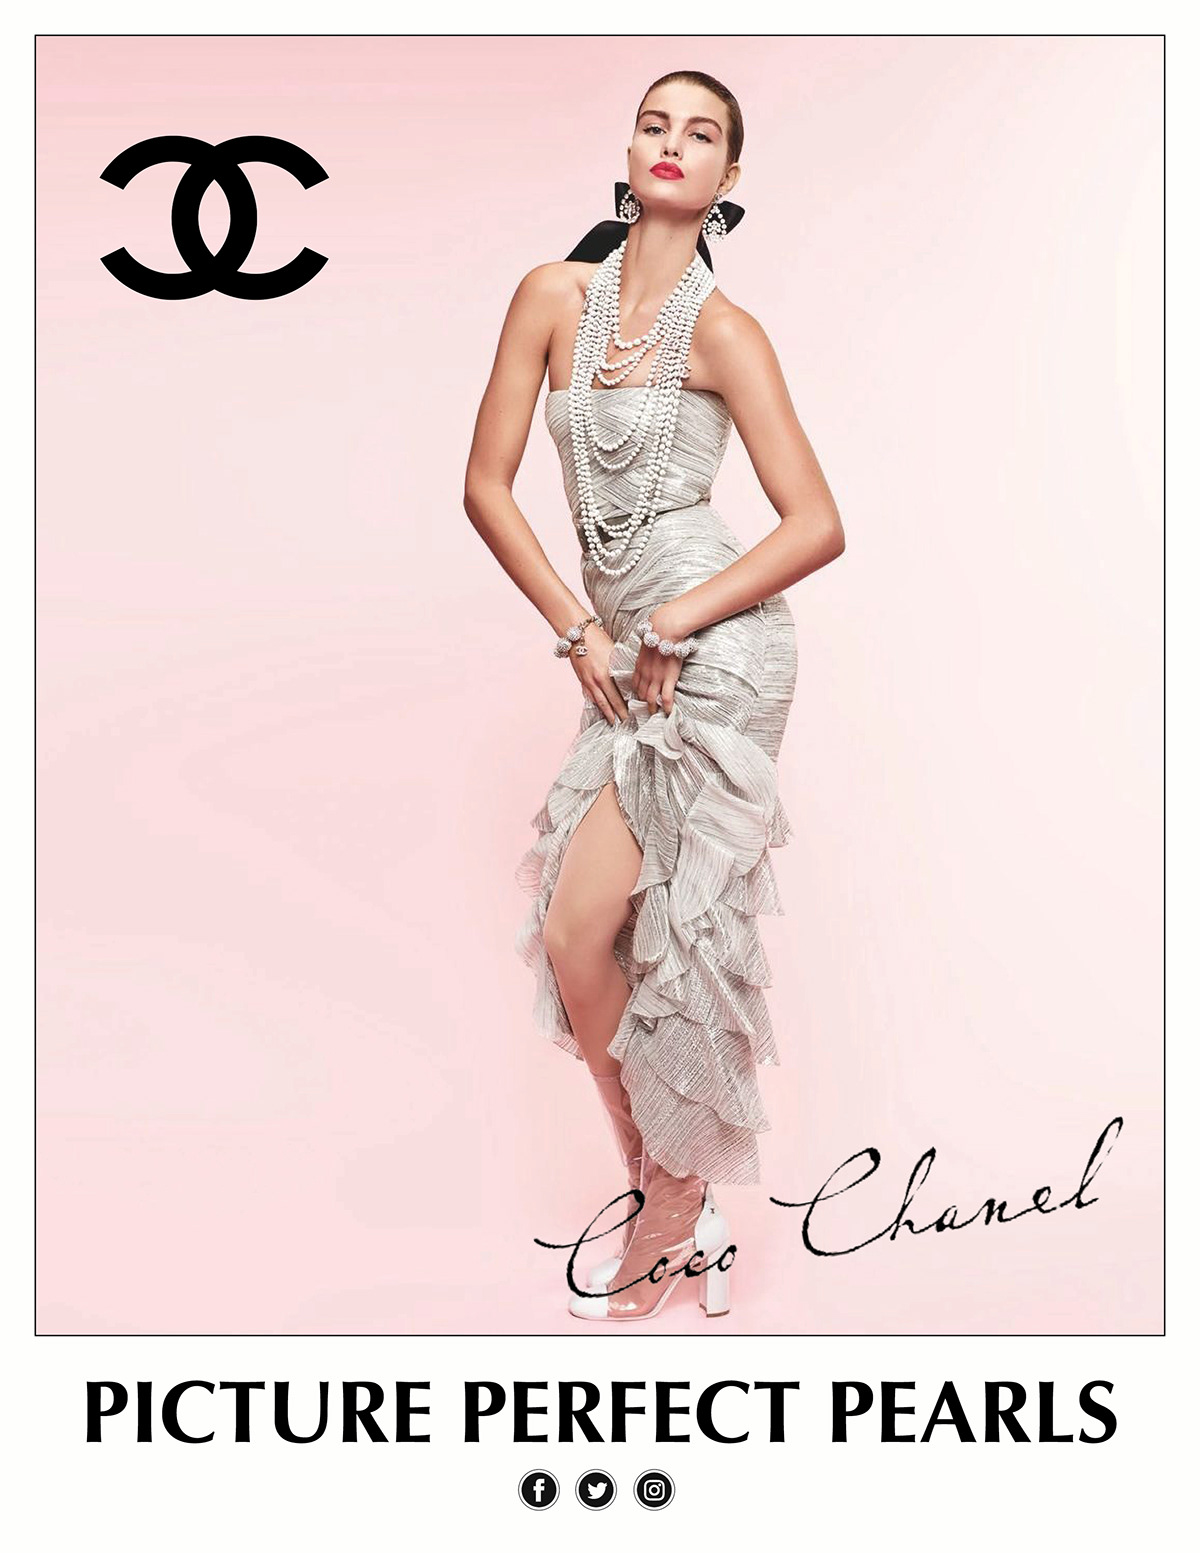 Chanel Advertising on Behance